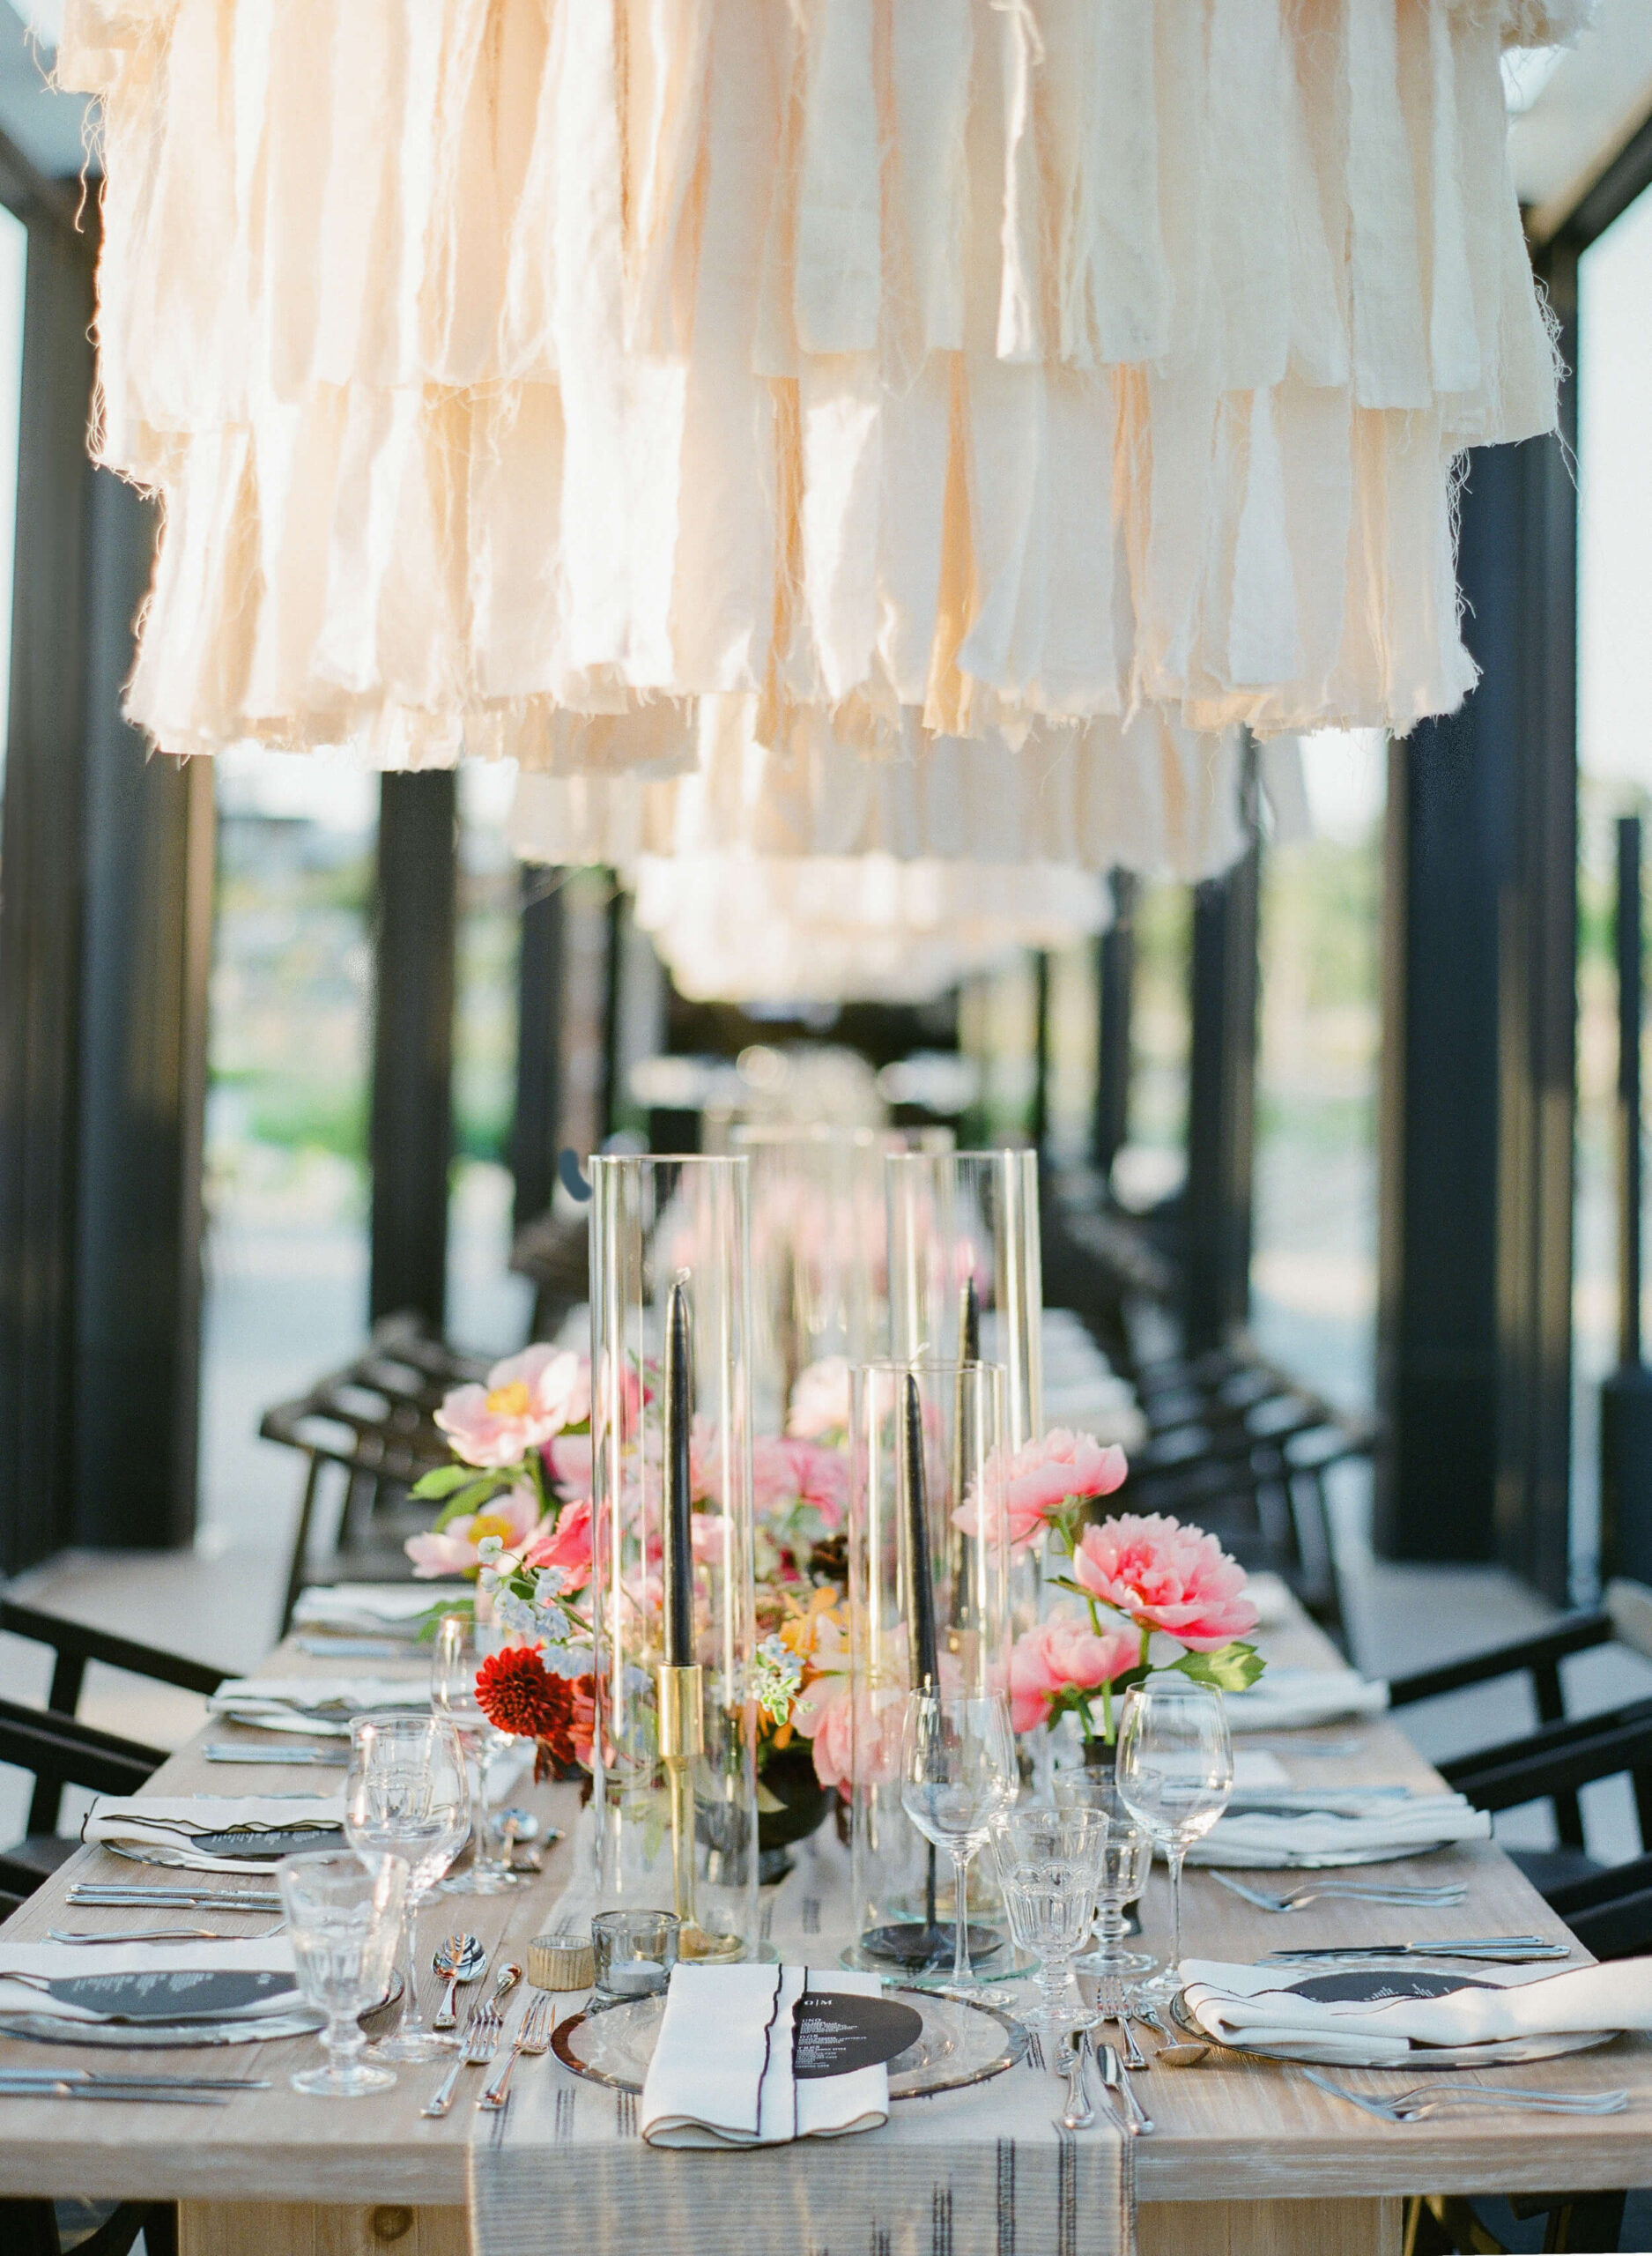 Wedding reception dining design details